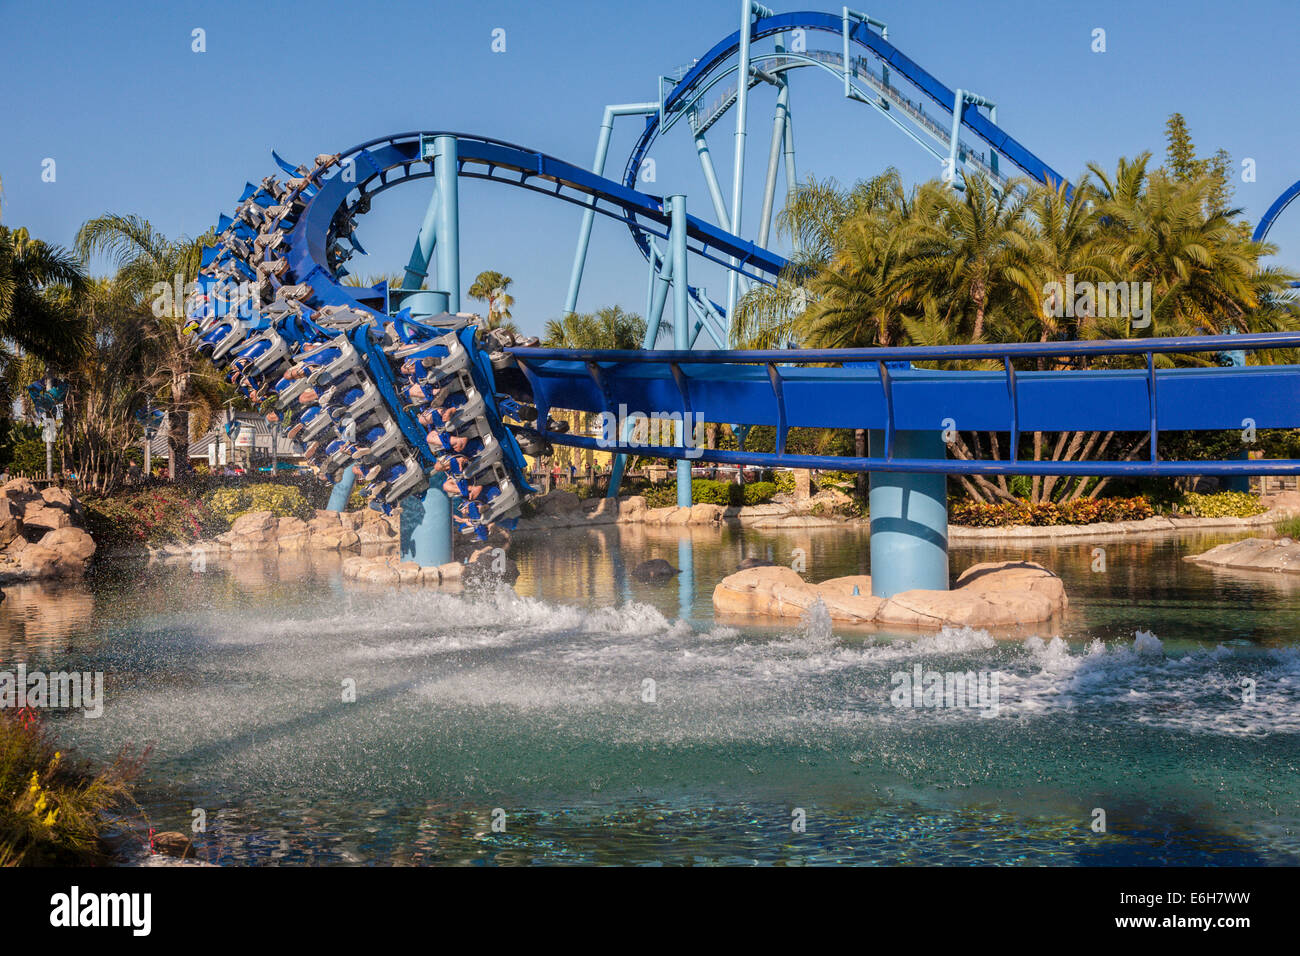 Manta roller coaster at Sea World in Orlando, Florida Stock Photo - Alamy